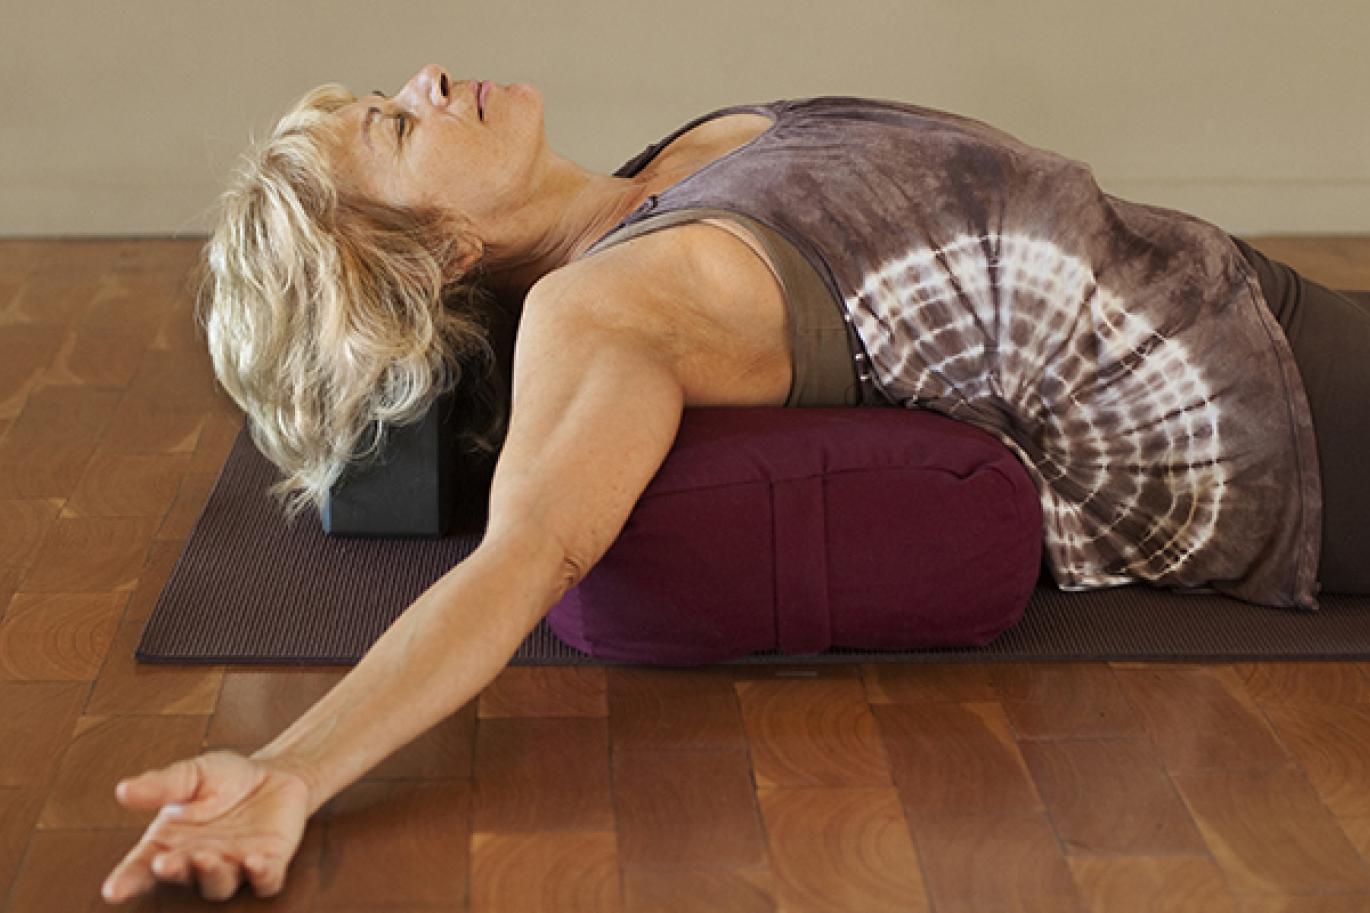 Woman performing yoga